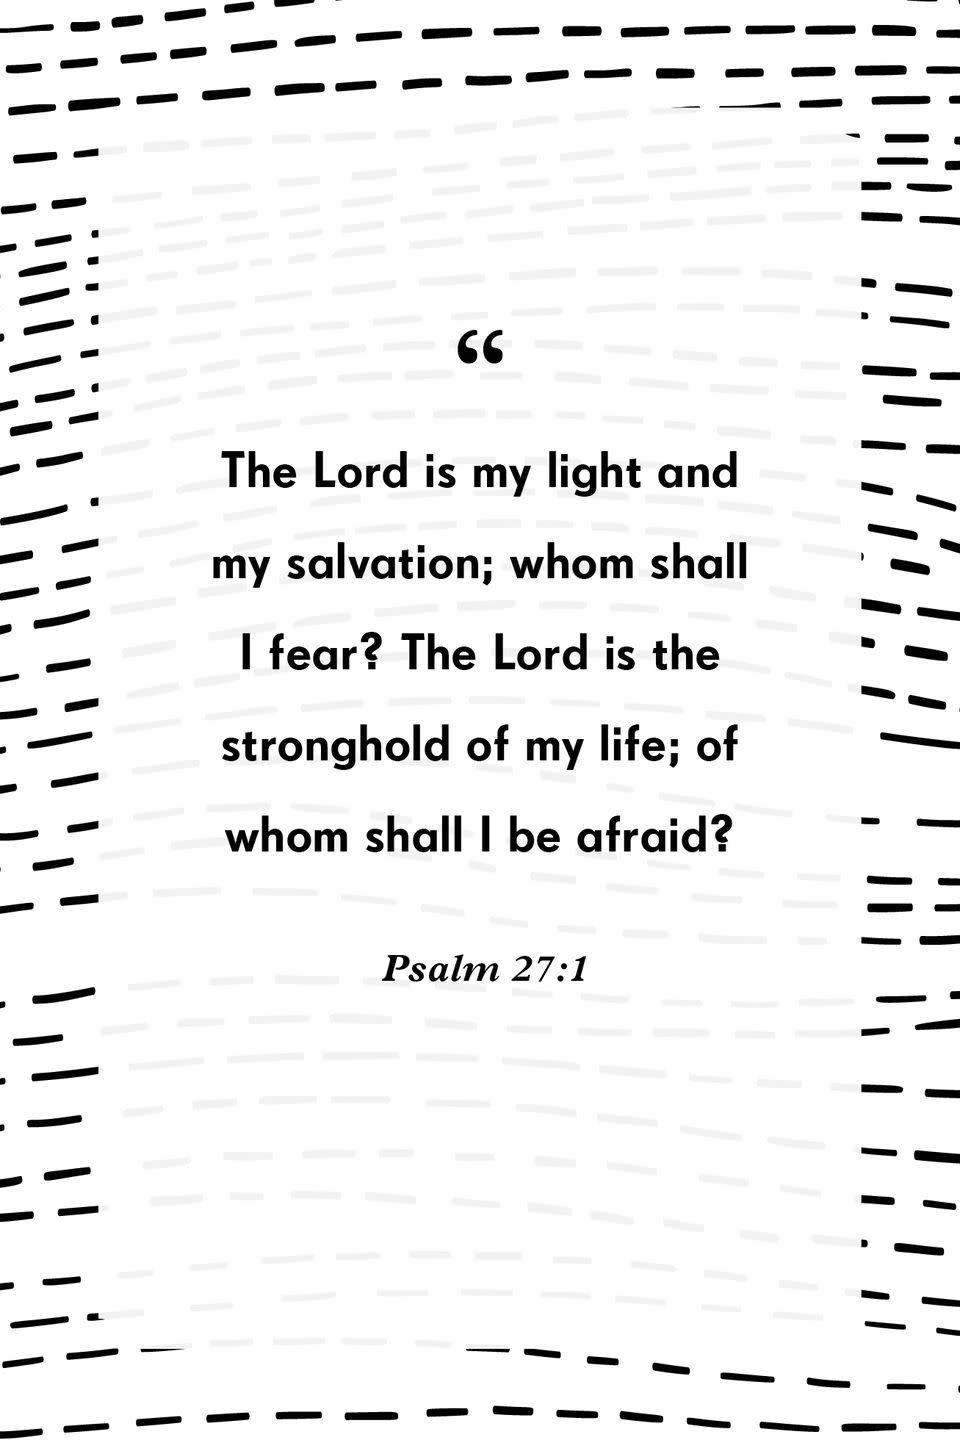 5) Psalm 27:1